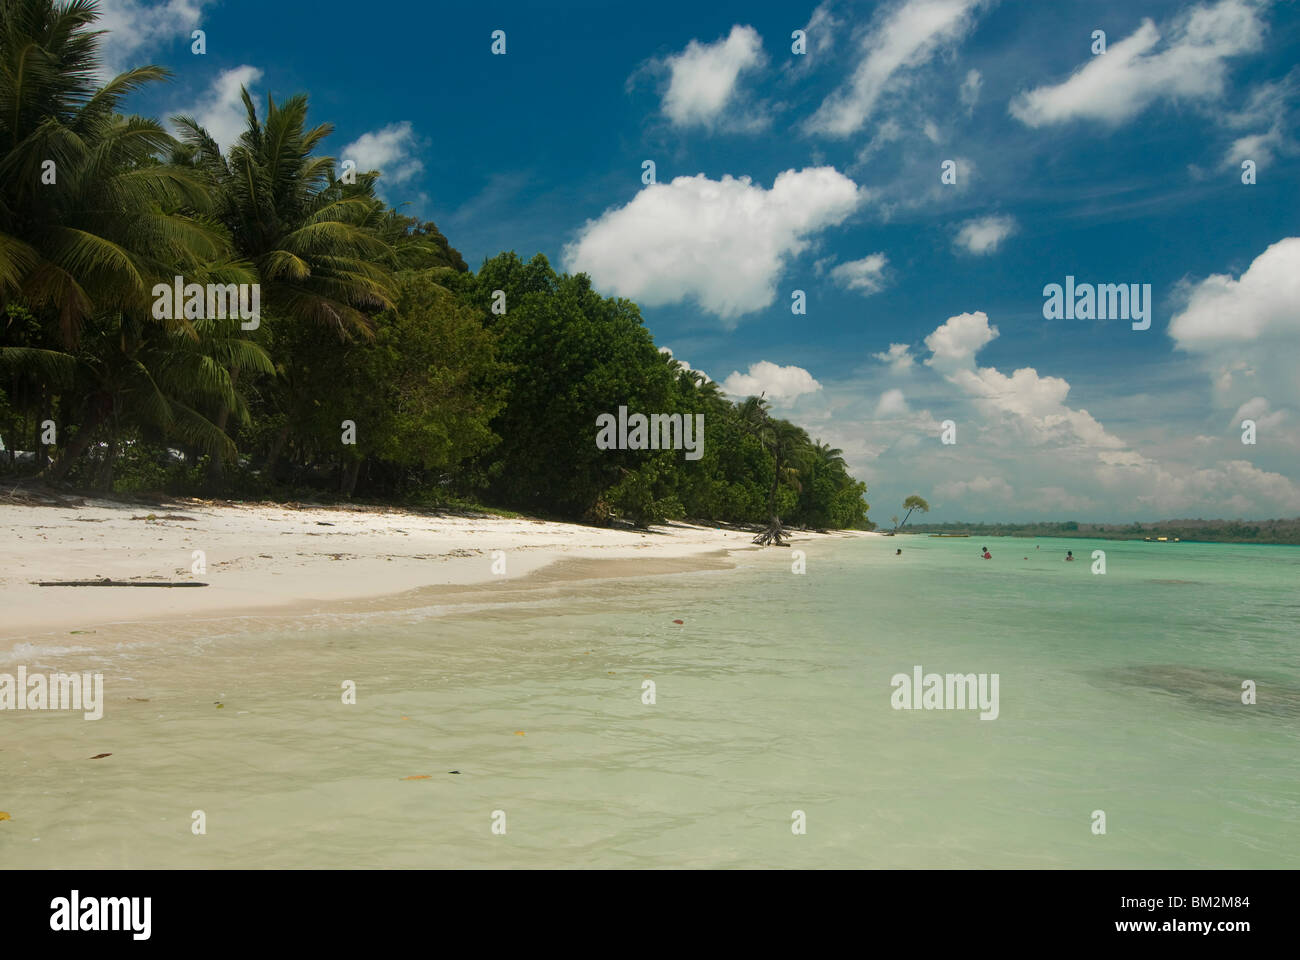 La spiaggia incontaminata, Havelock Island Isole Andamane, India, Oceano Indiano Foto Stock